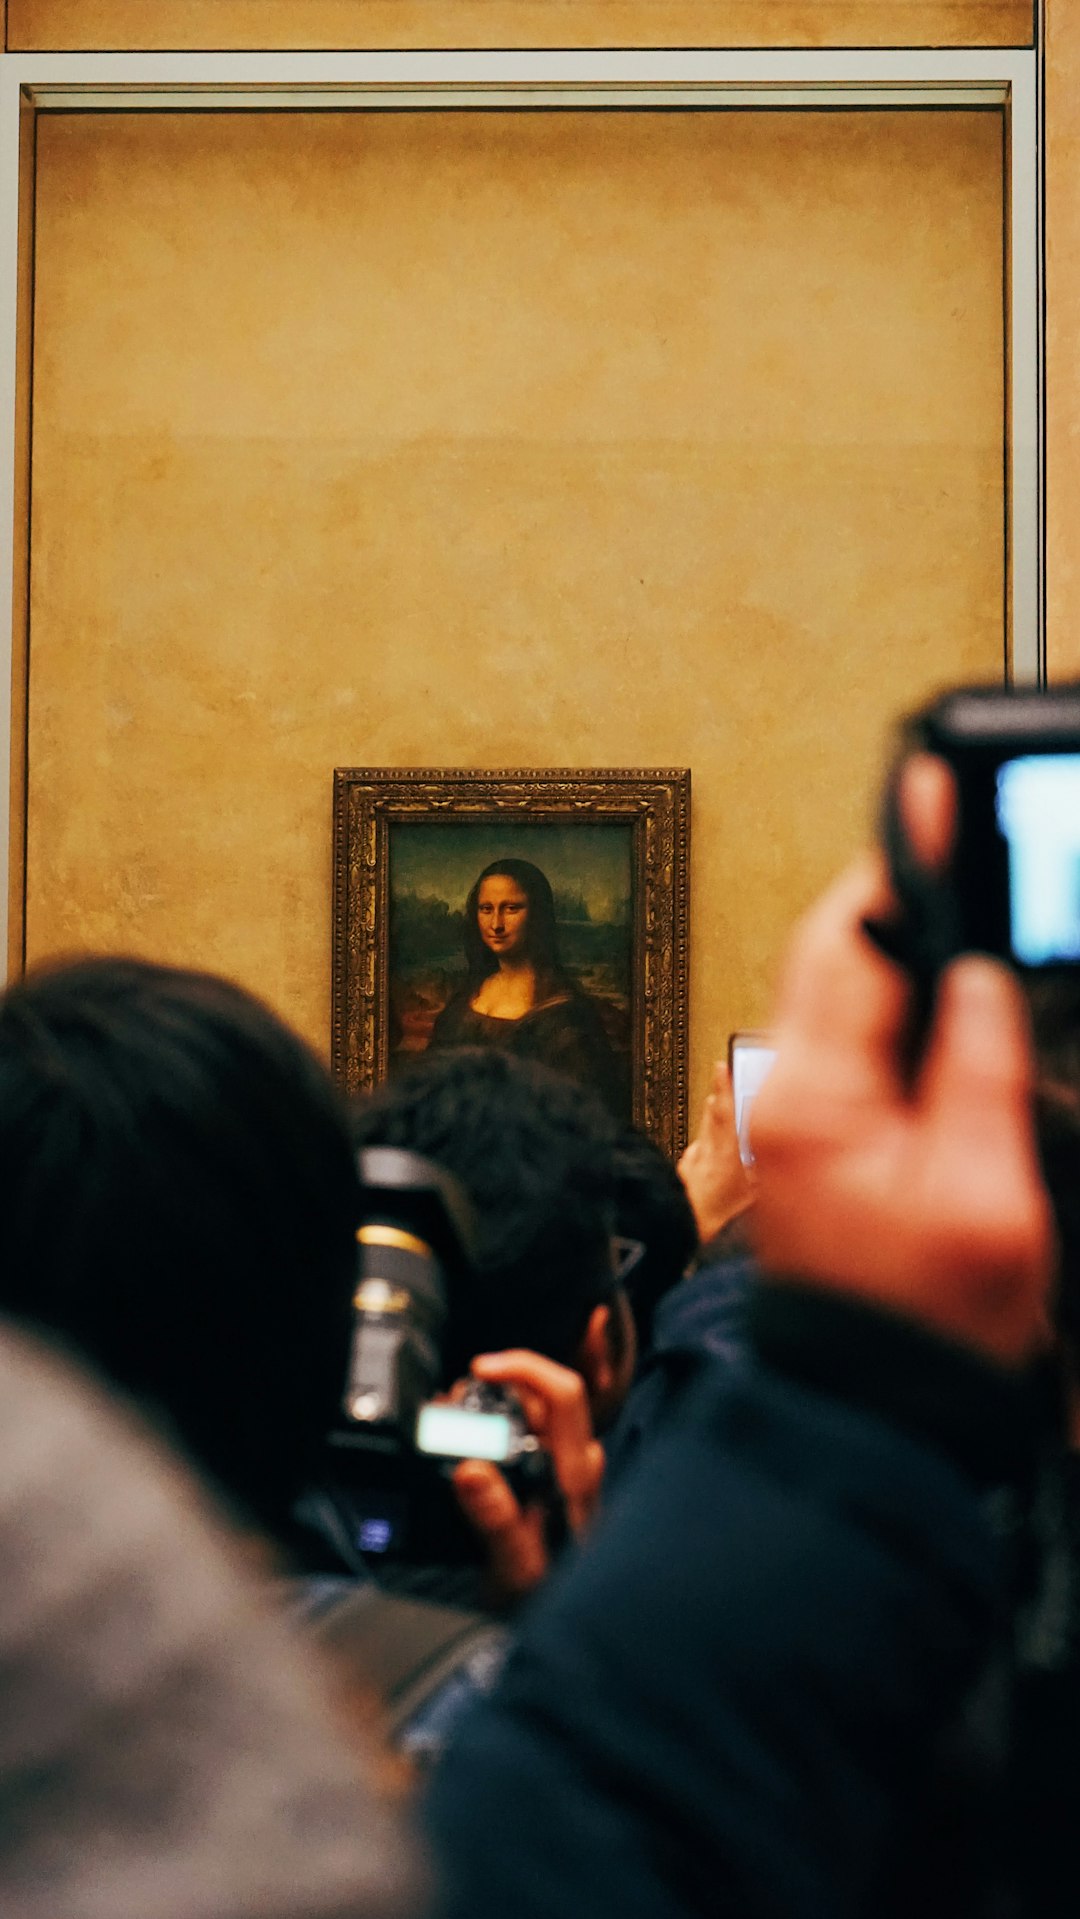 Mona Lisa by Leonardo Da Vinci painting